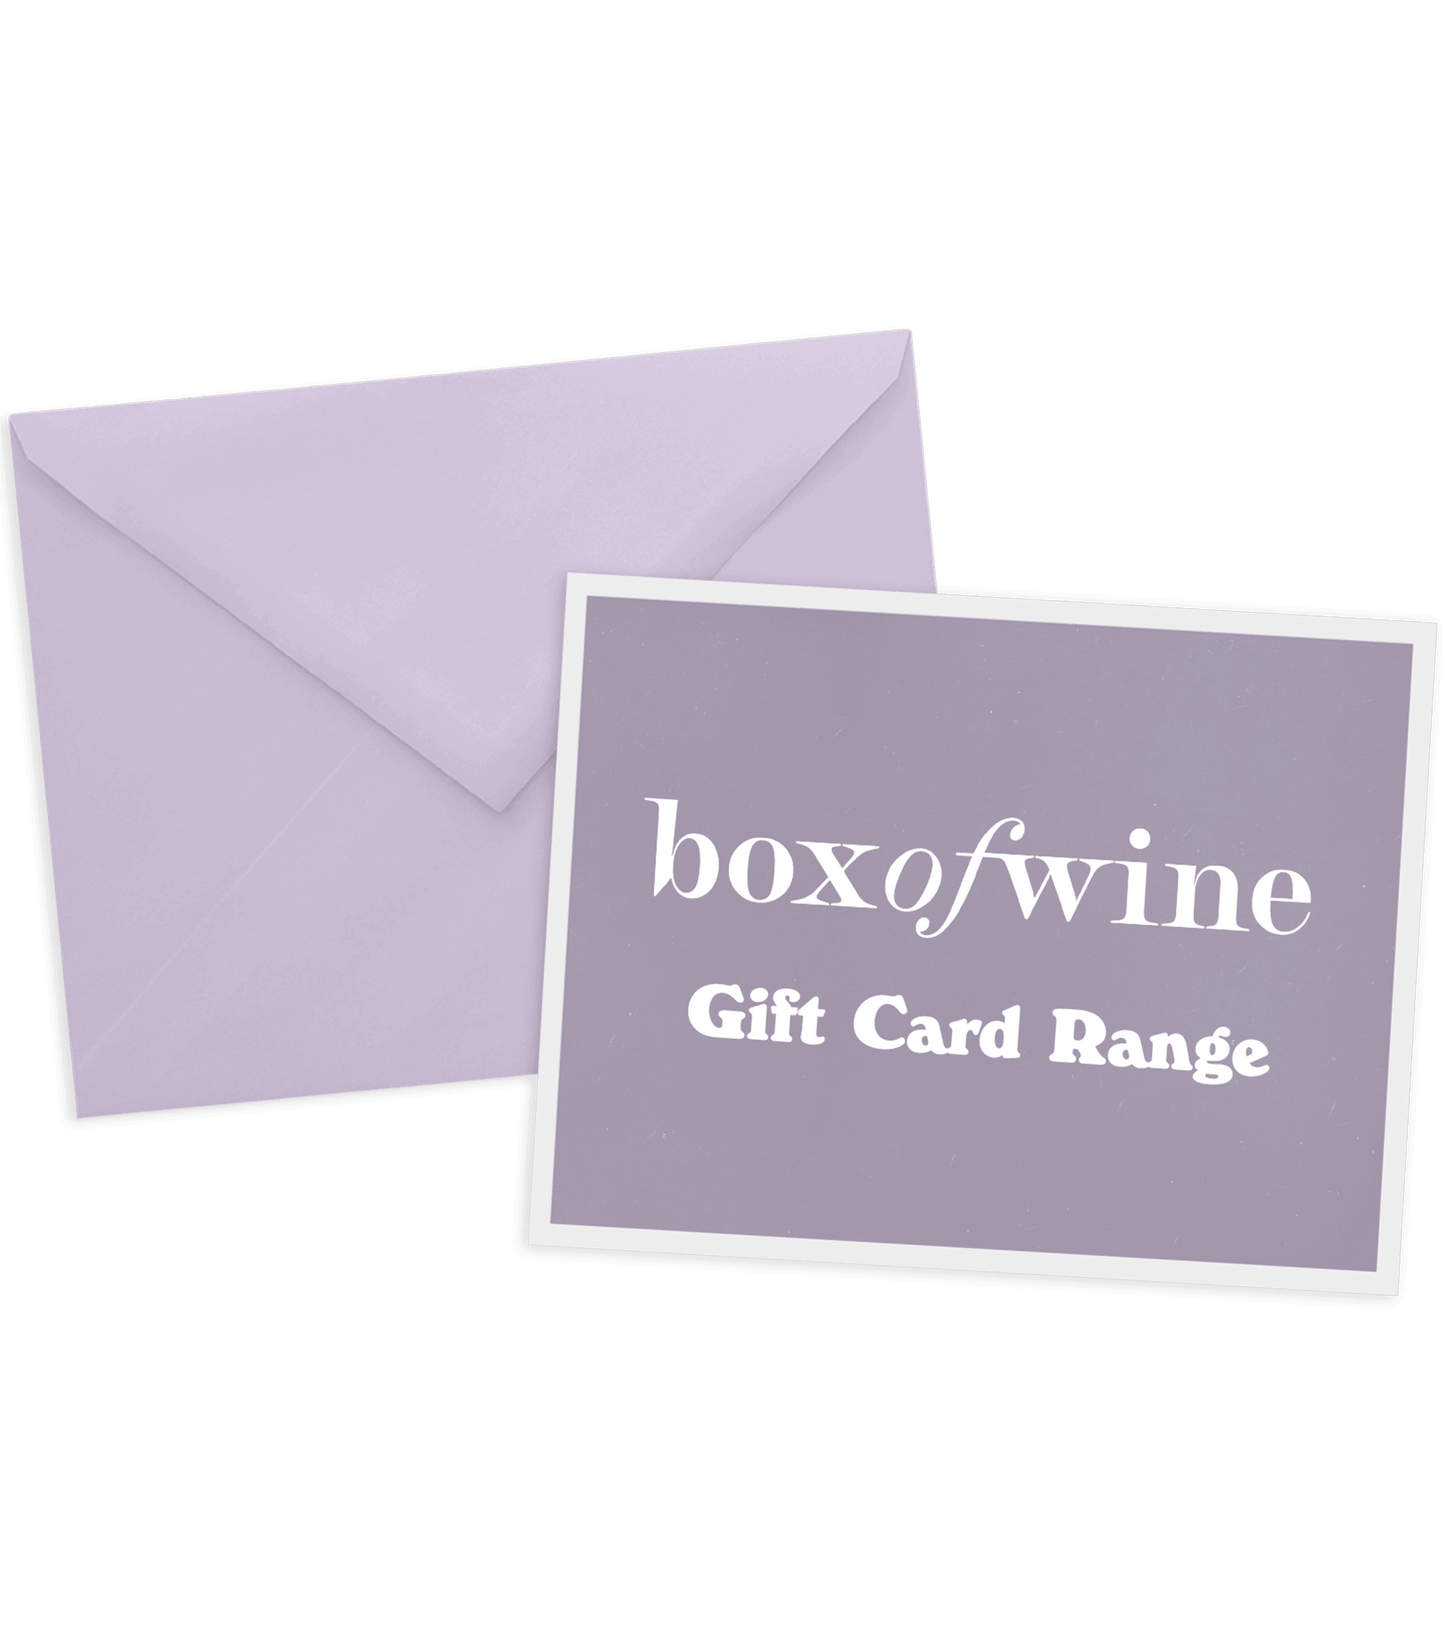 Box of Wine Gift Card - Boxofwine.ie